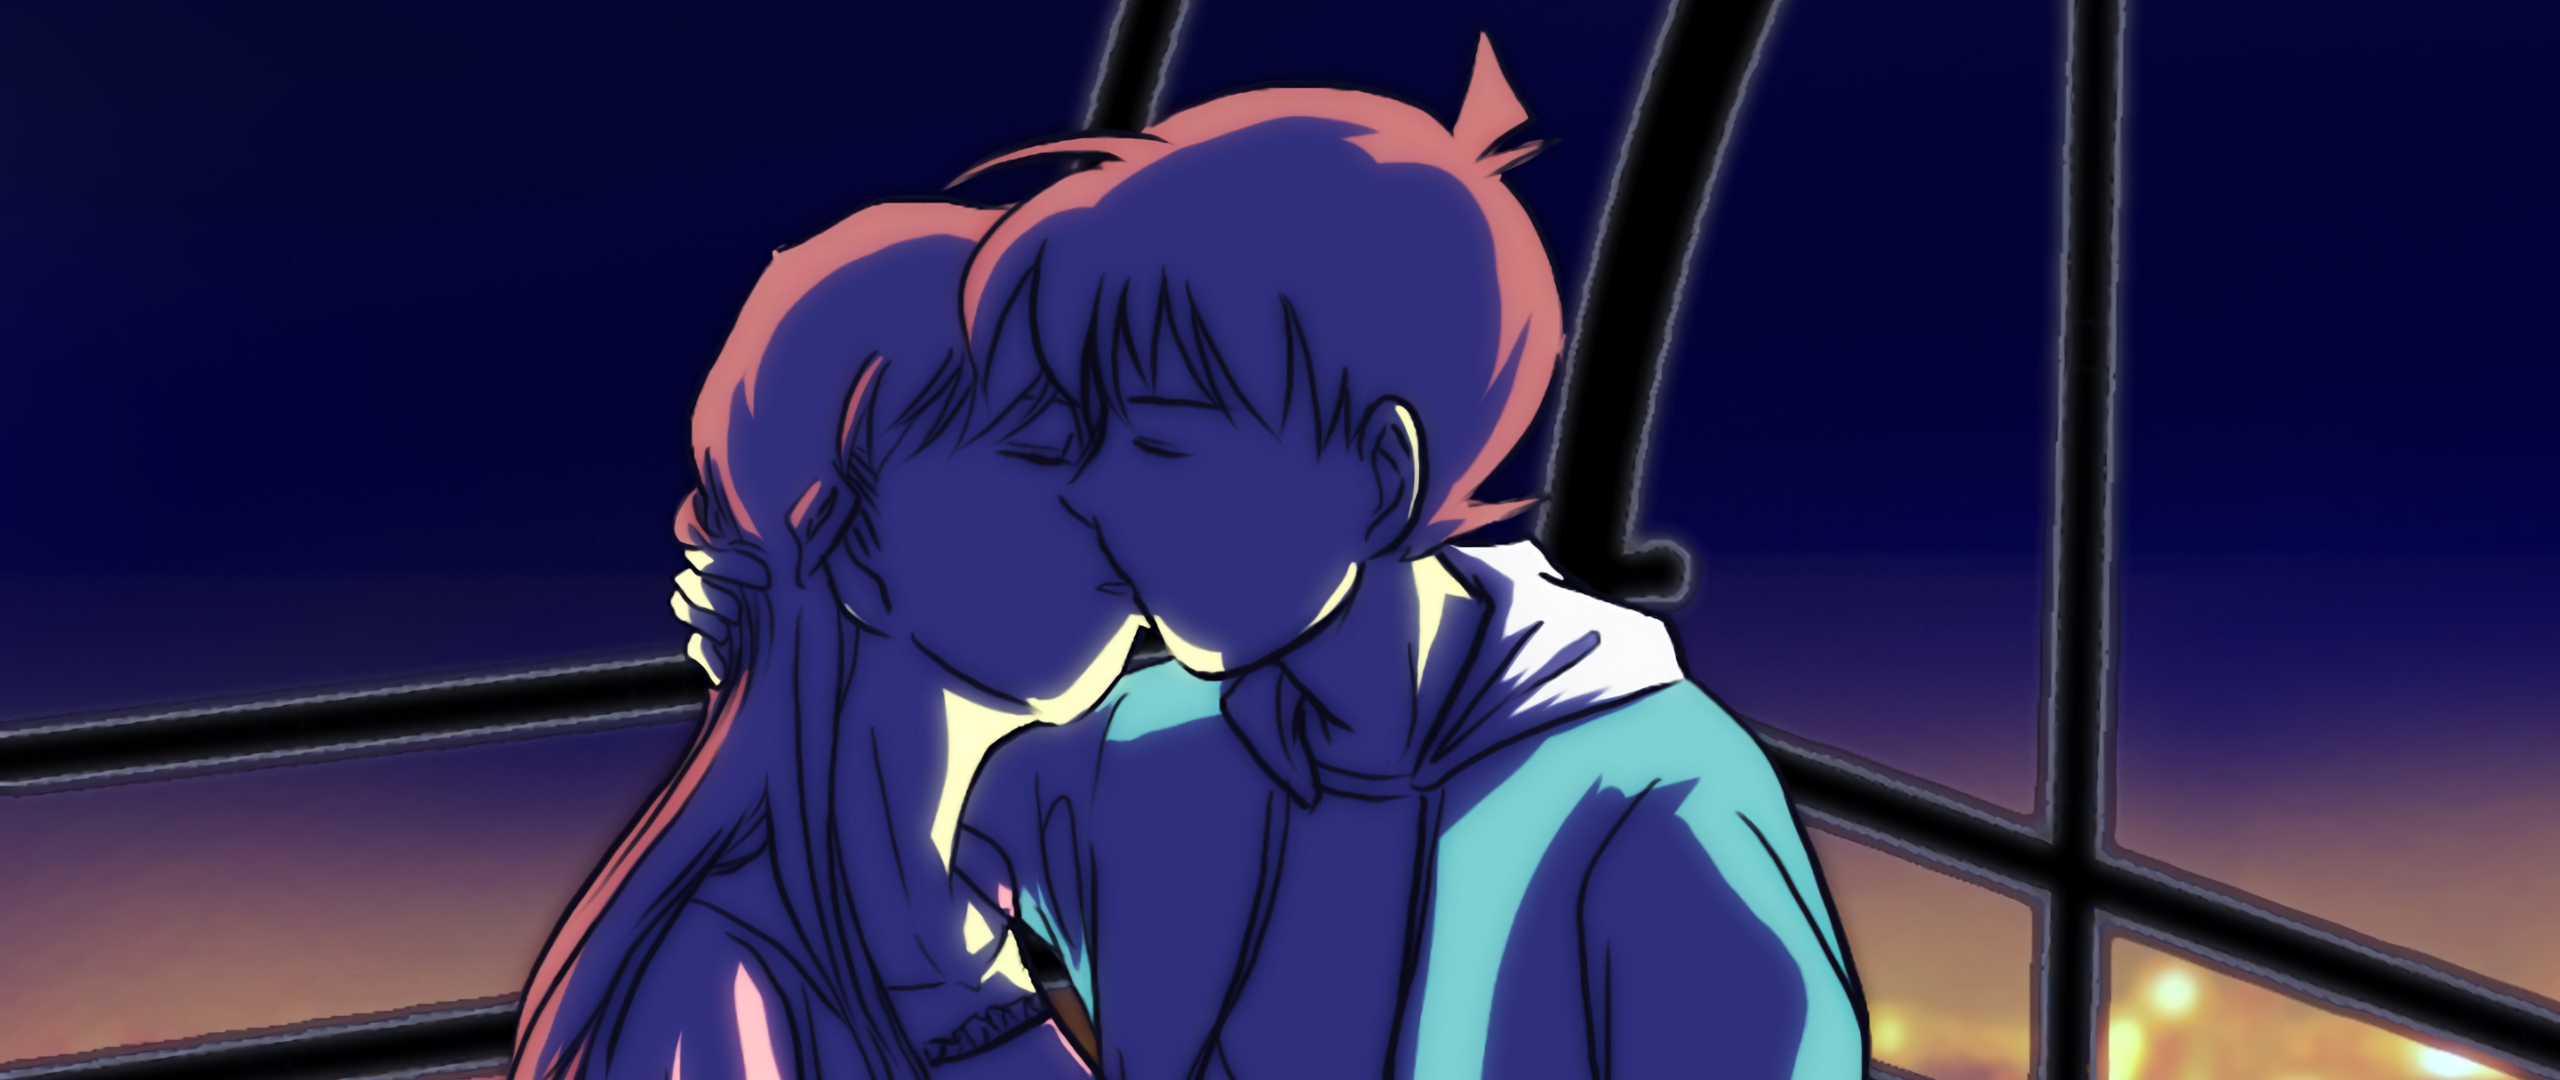 Wallpaper Couple, Kiss, Art, Love, Anime - Anime Couple - HD Wallpaper 